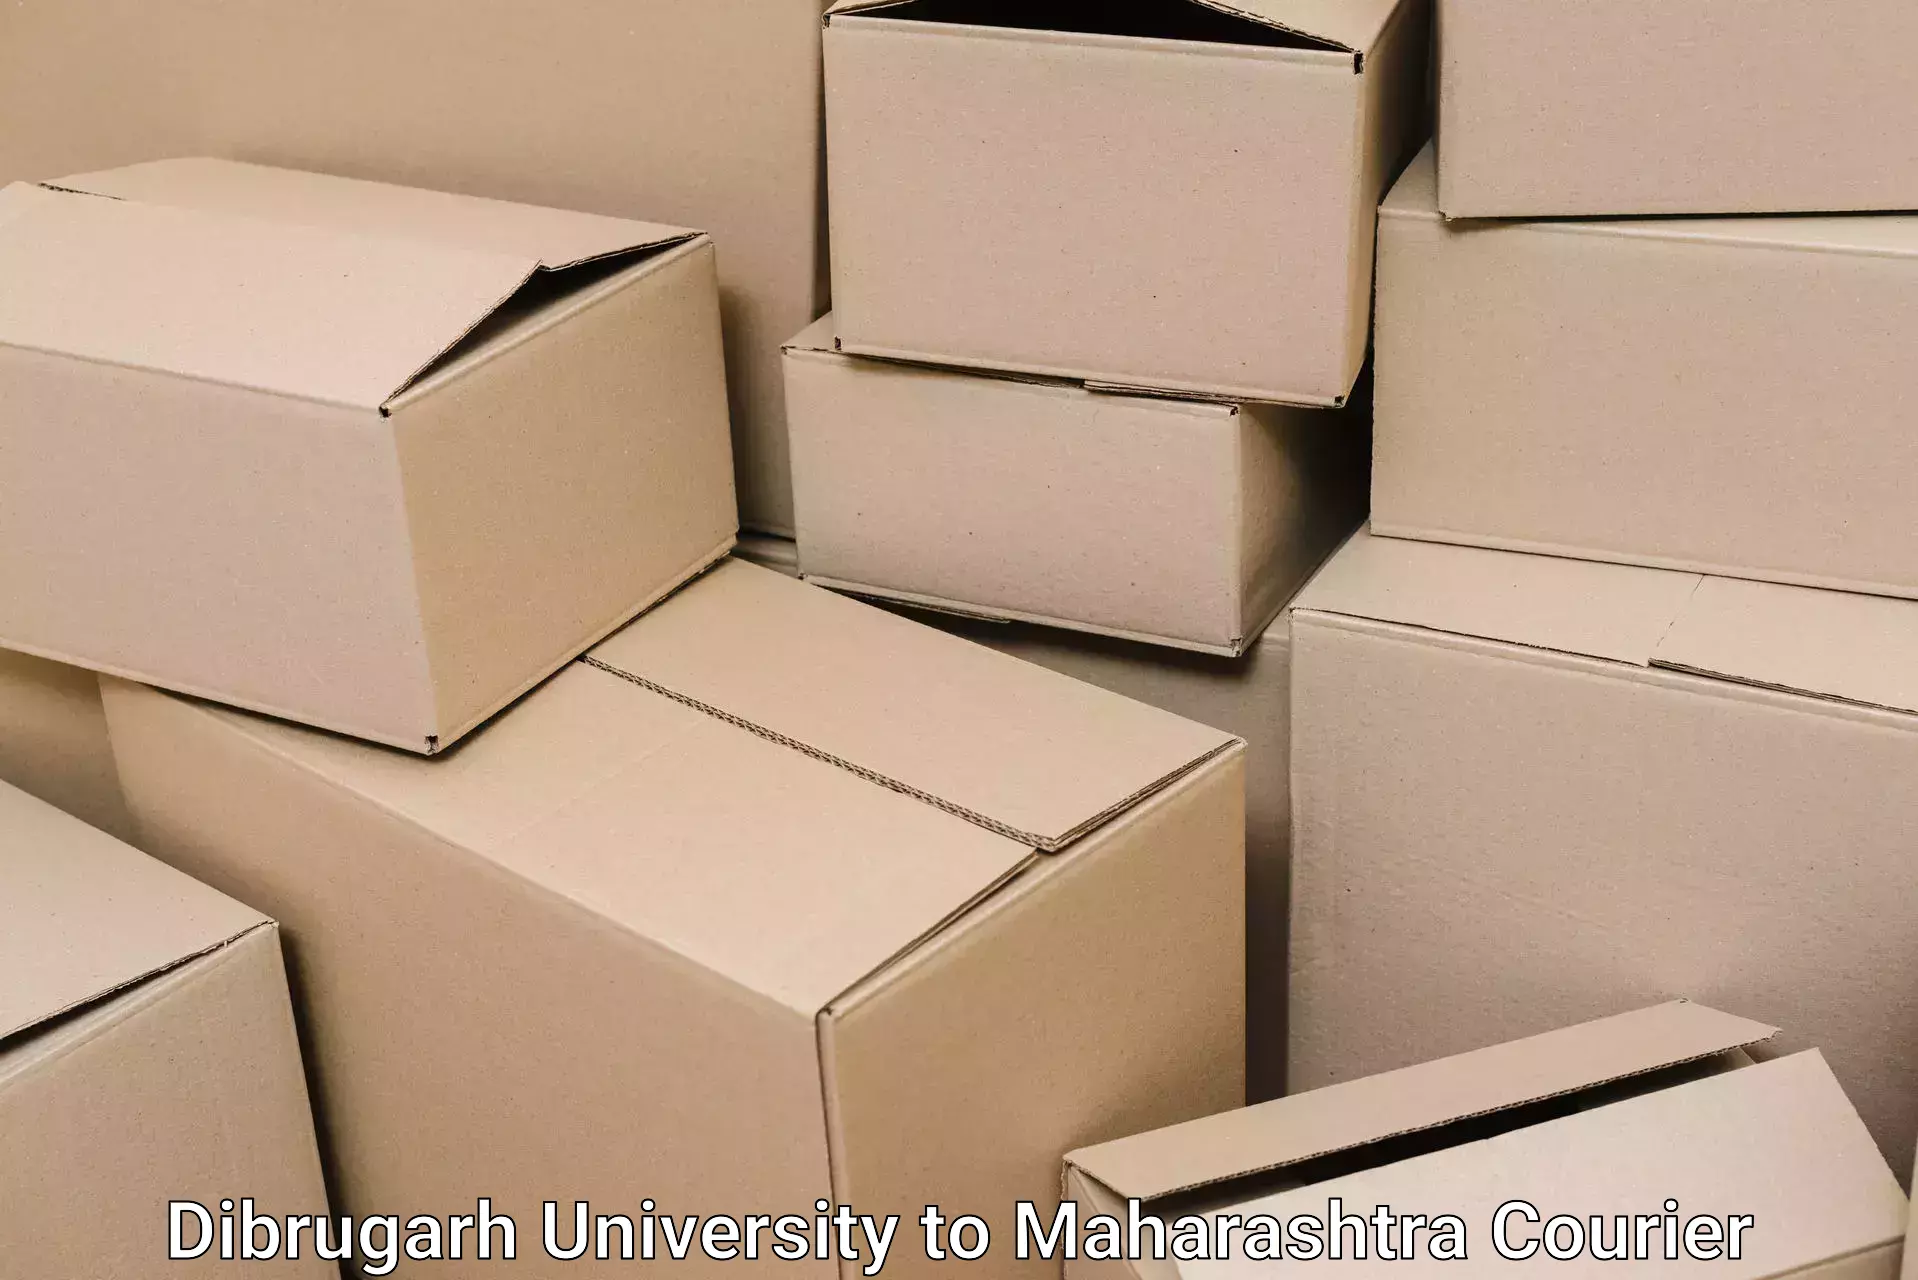 Furniture transport company Dibrugarh University to Satana